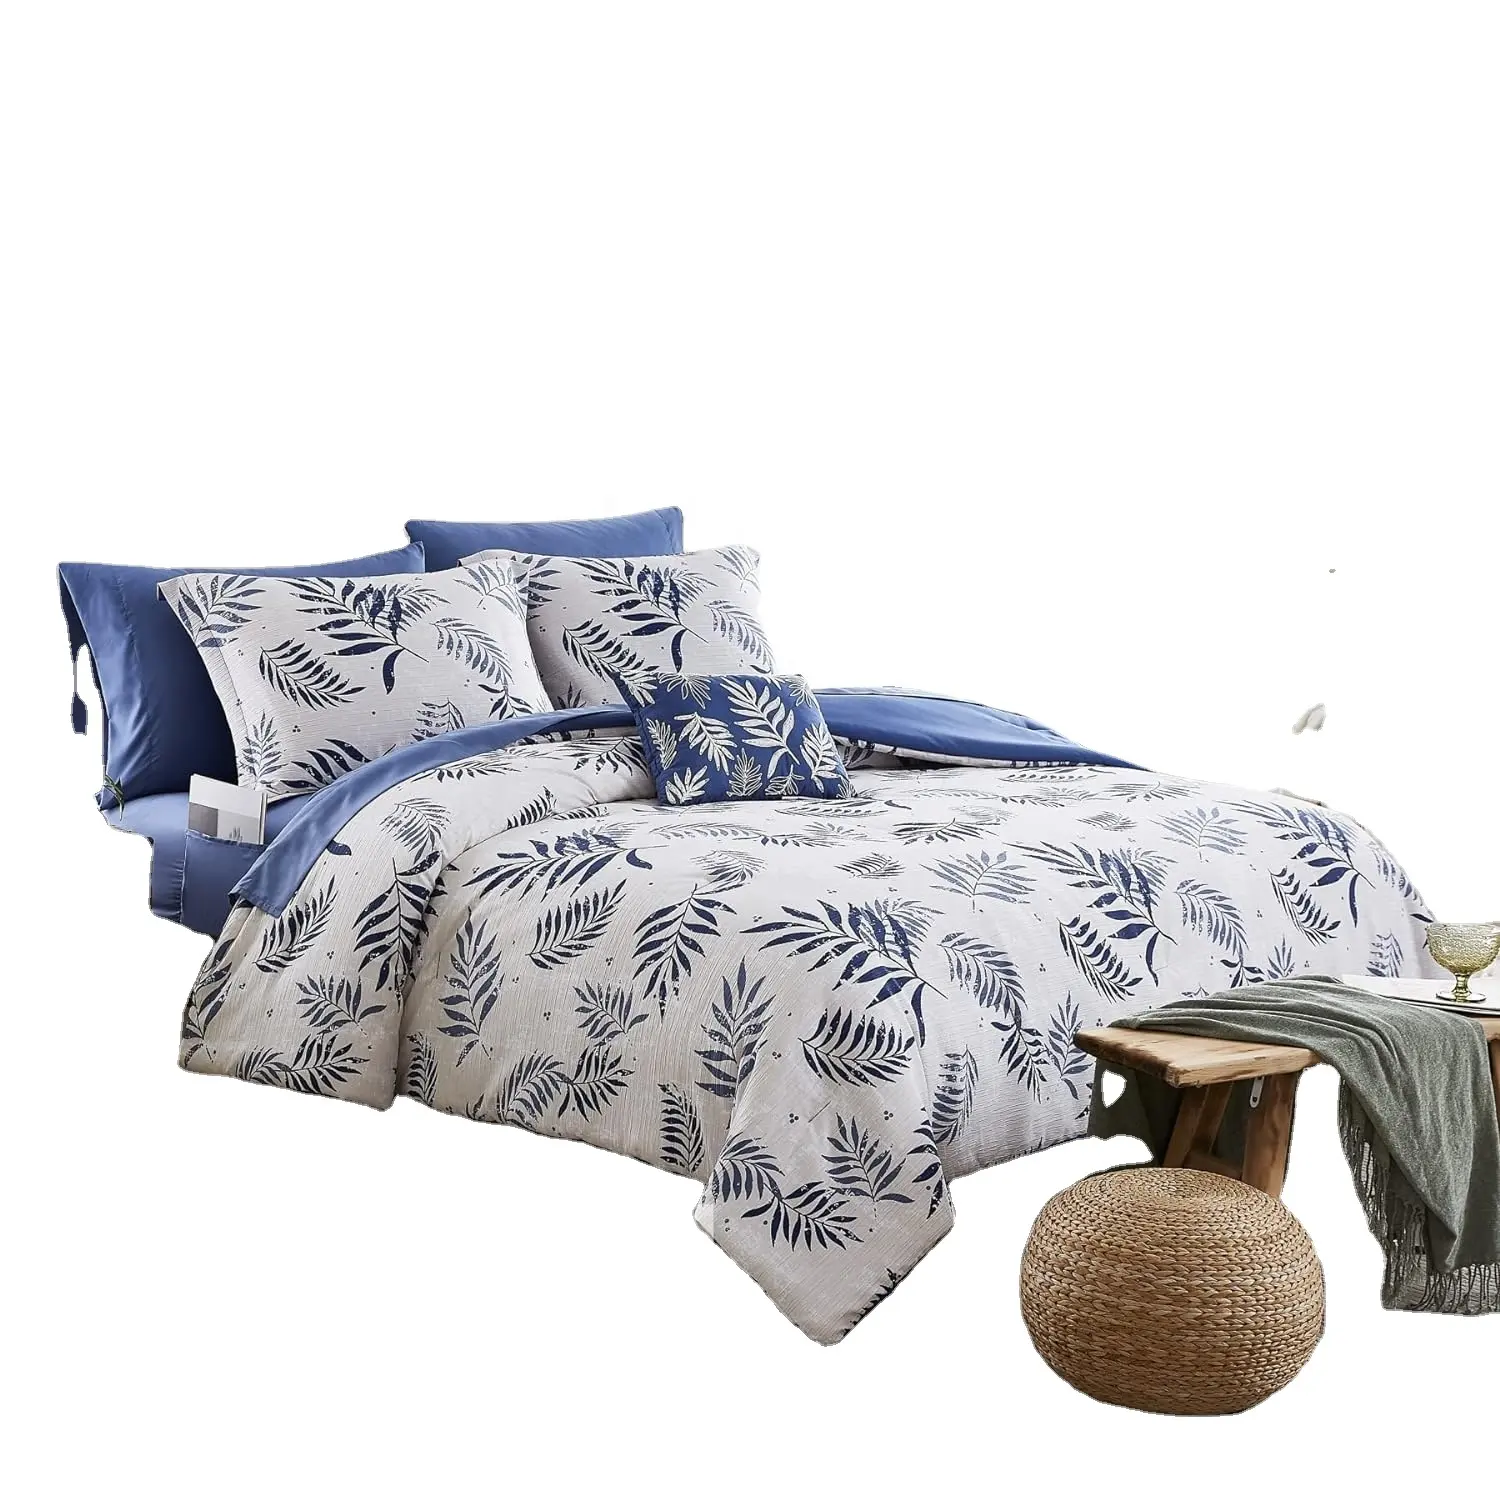 New design duvet bedding bedroom queen bed quilt cover set pillow uk size quilt cover